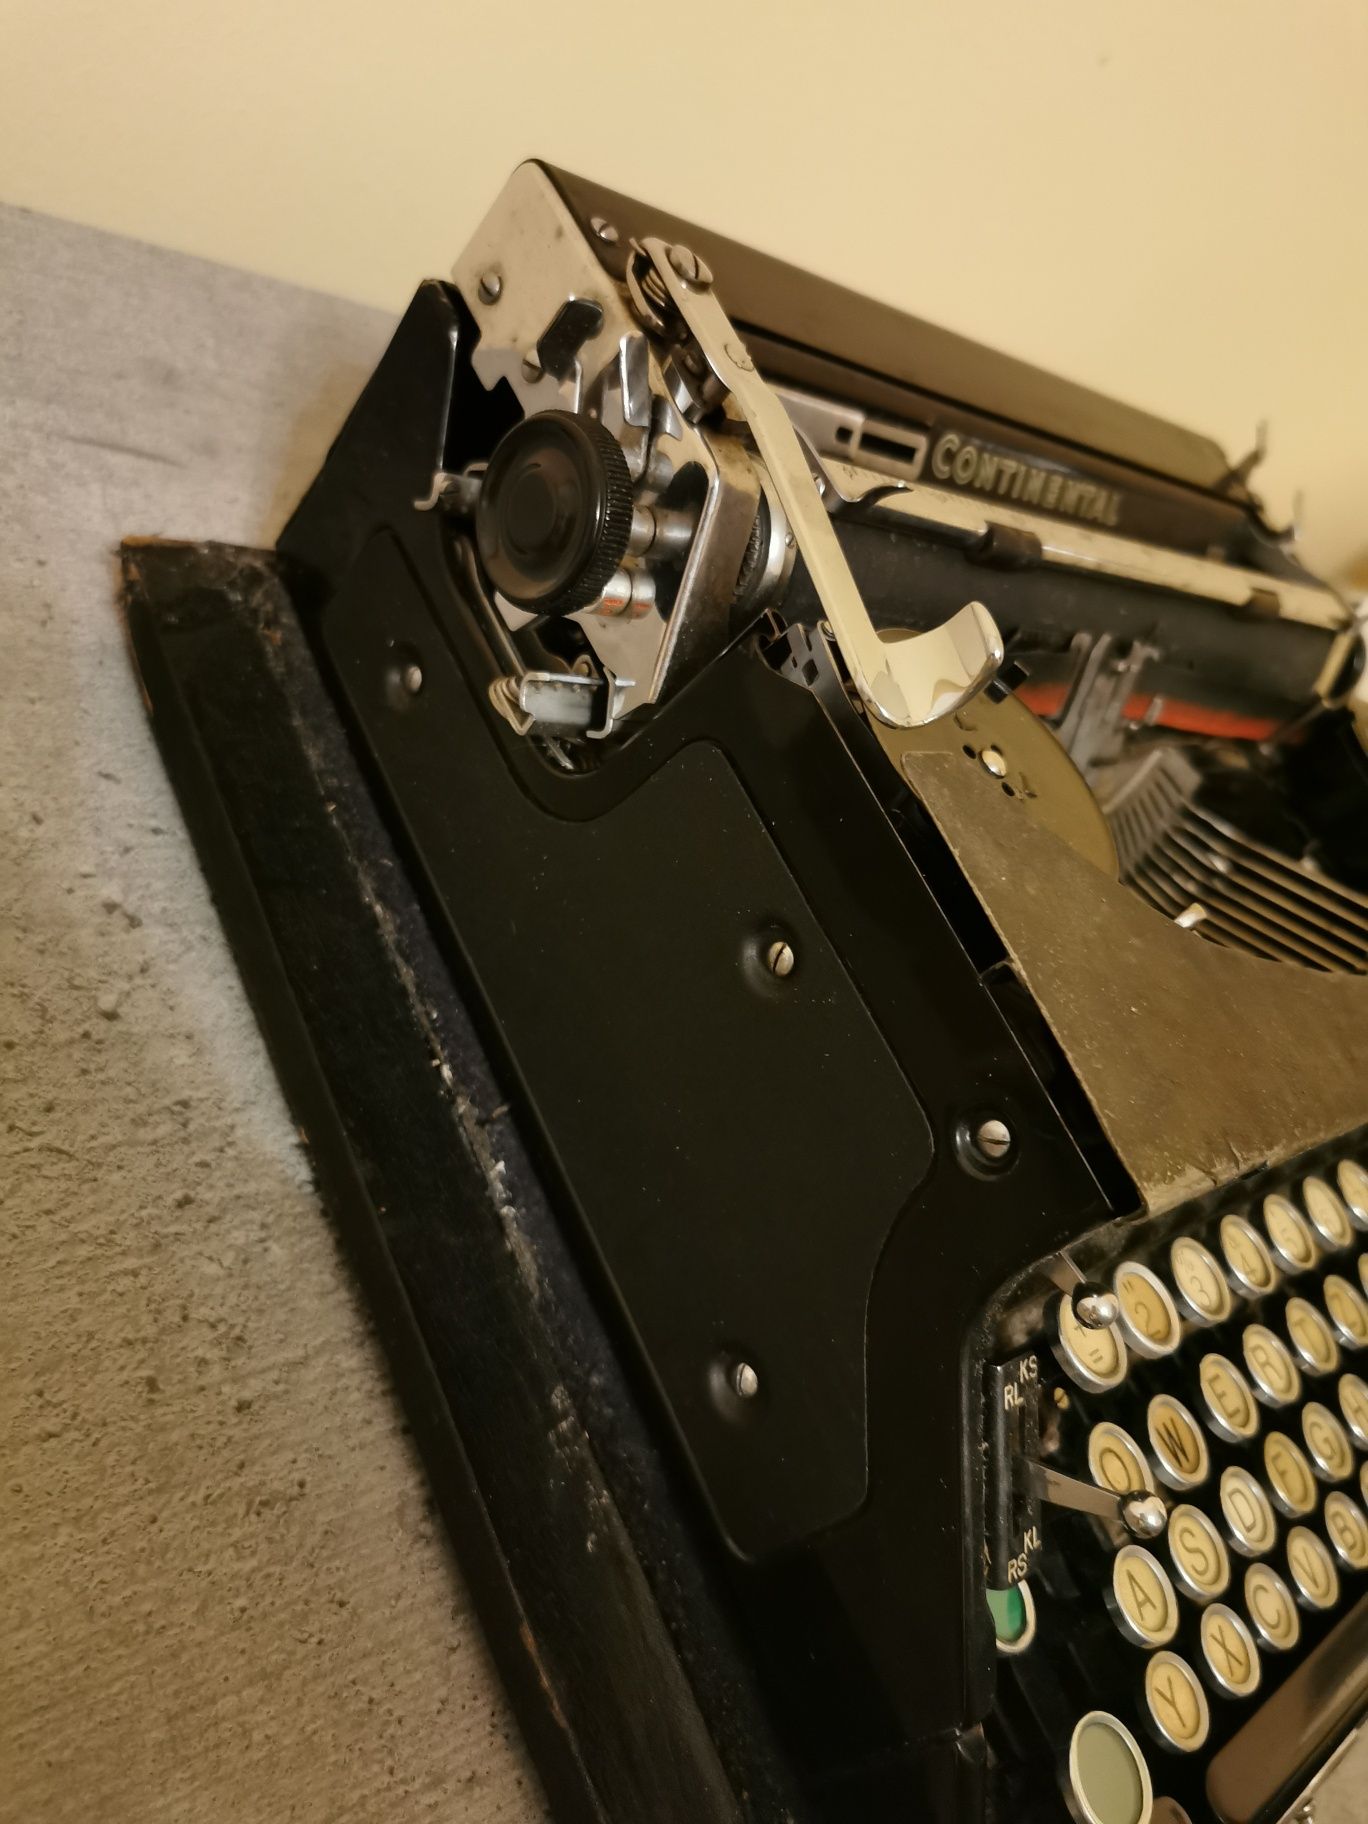 Mașina de scris Continental 100 cu toc original